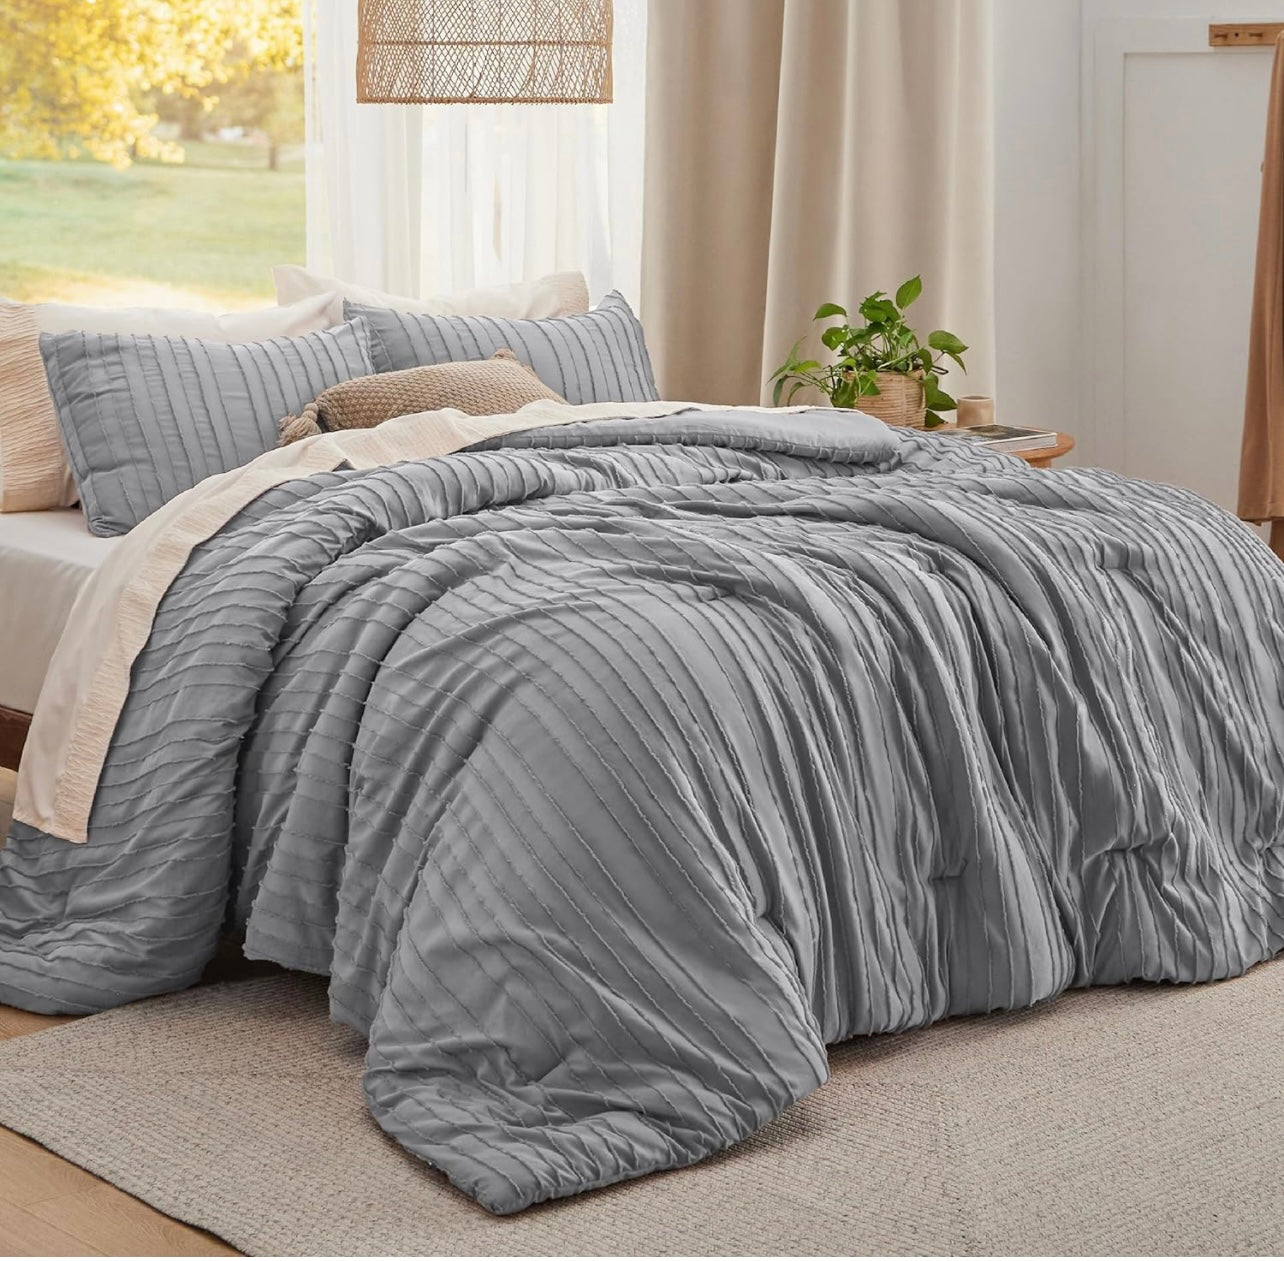 Bedsure Boho Comforter Queen - Grey Tufted Bedding Comforter for all seasons 3 piece set